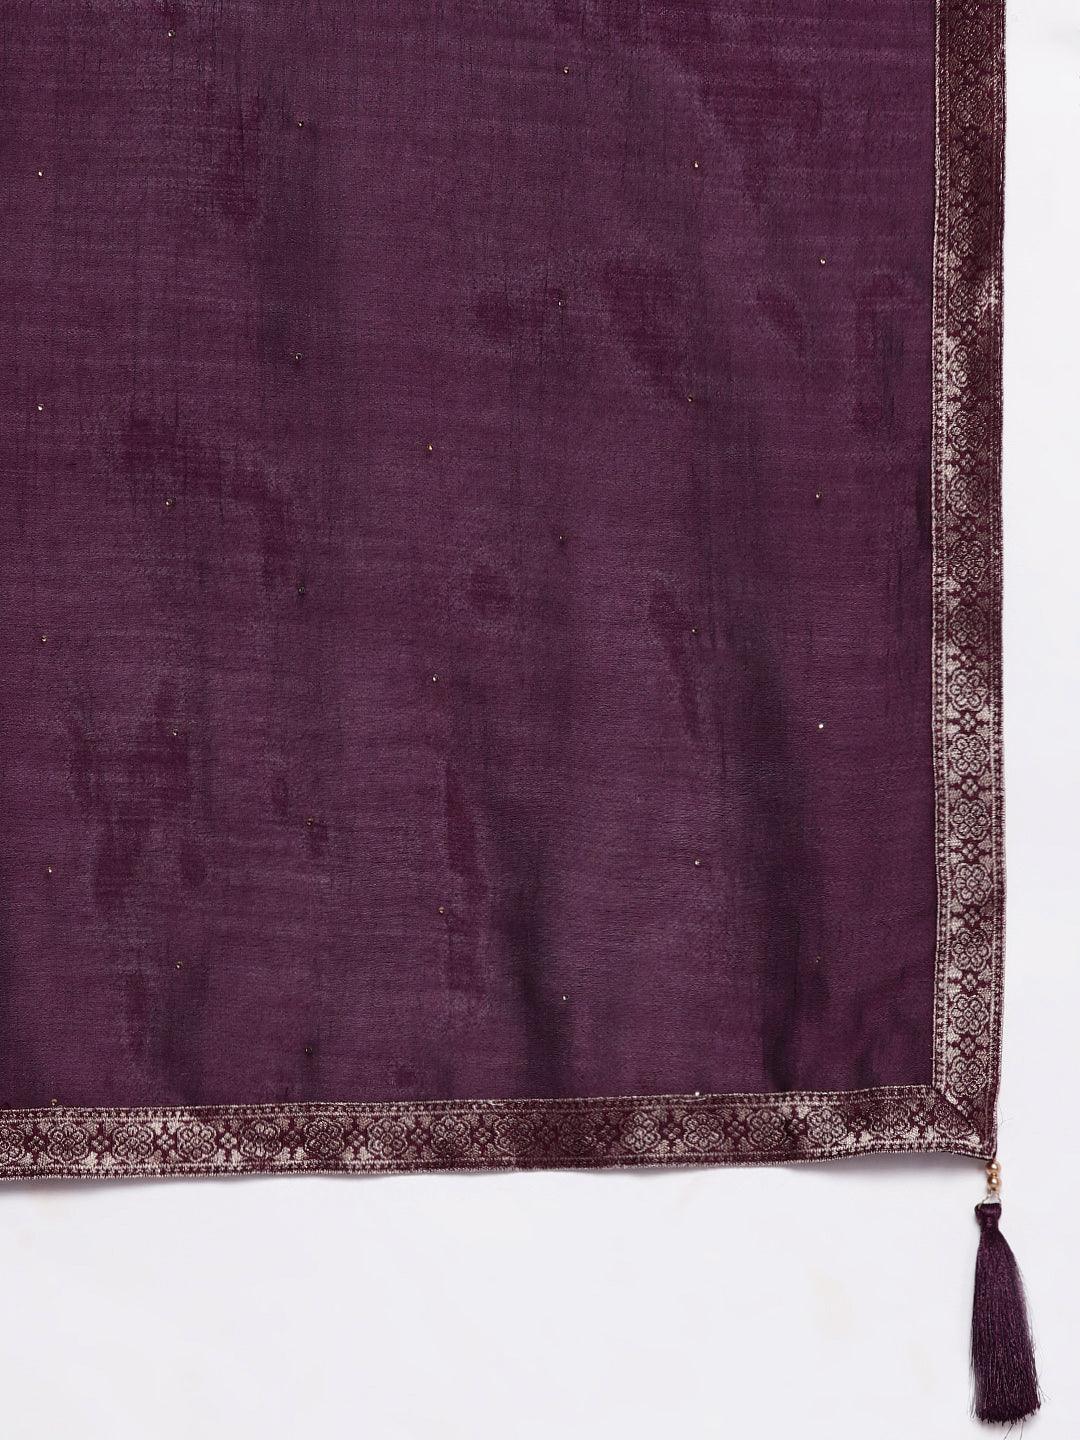 Purple Yoke Design Silk Blend Anarkali Suit With Dupatta